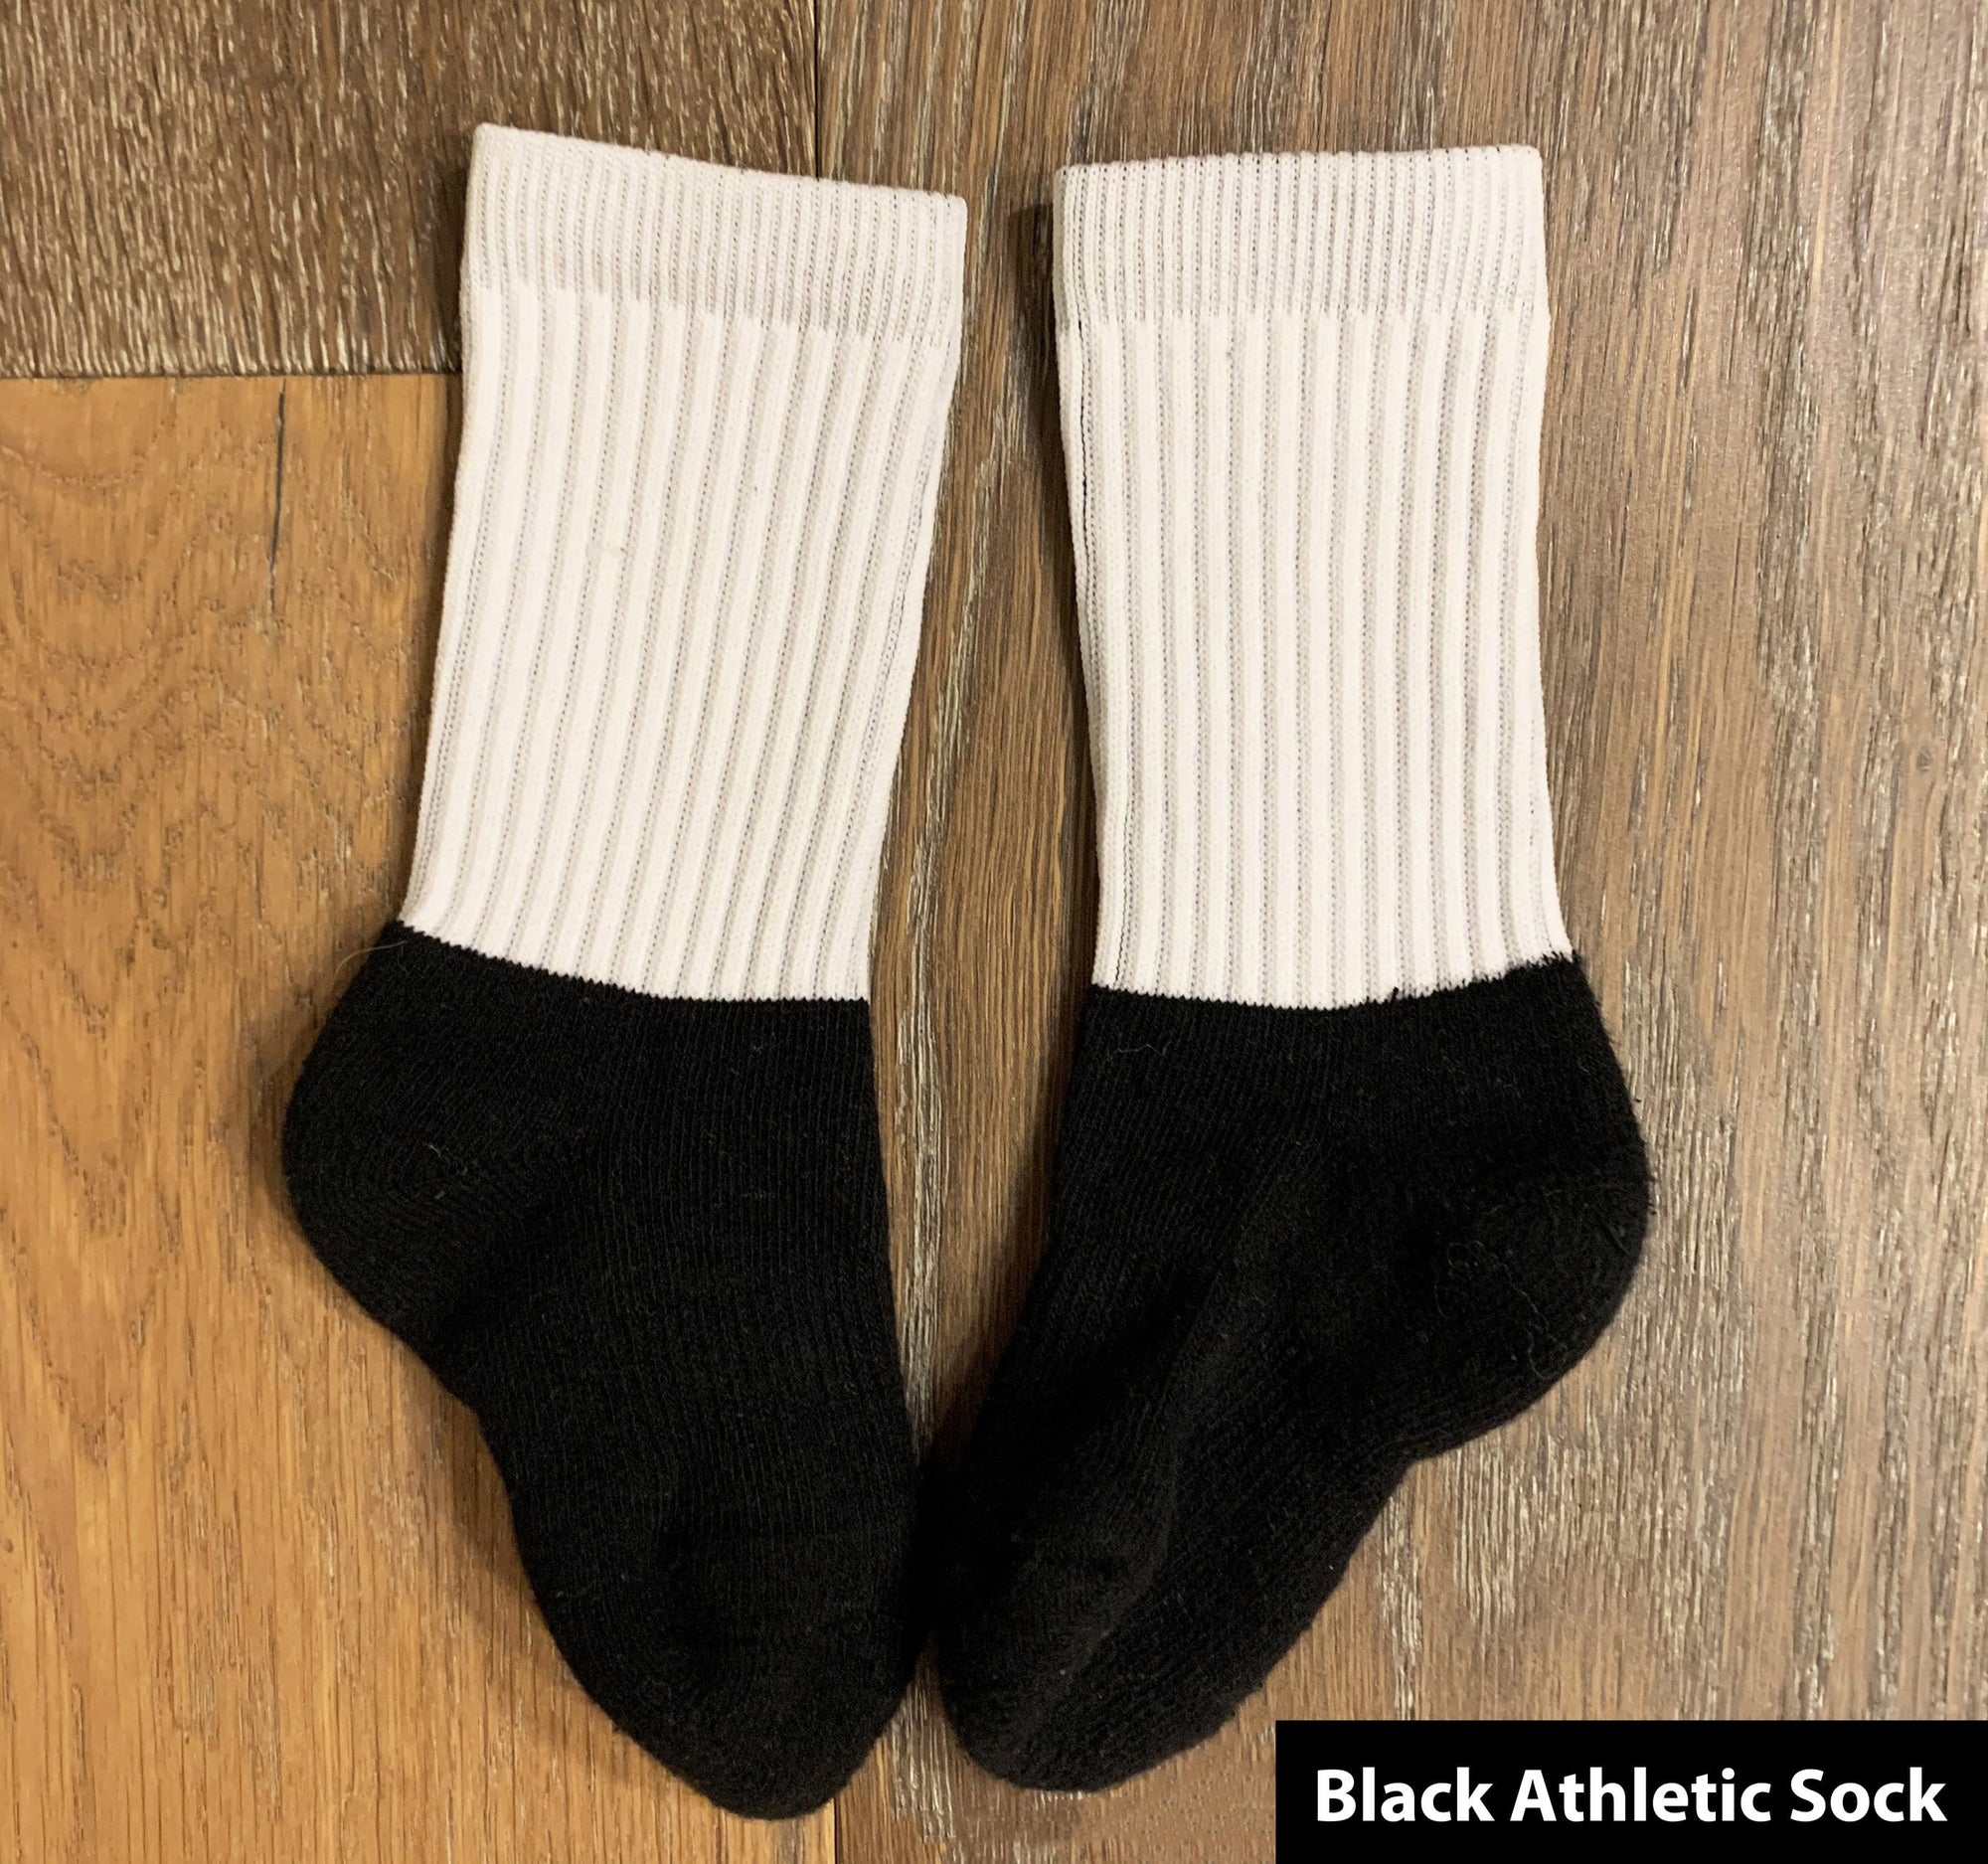 Blank Kids Socks